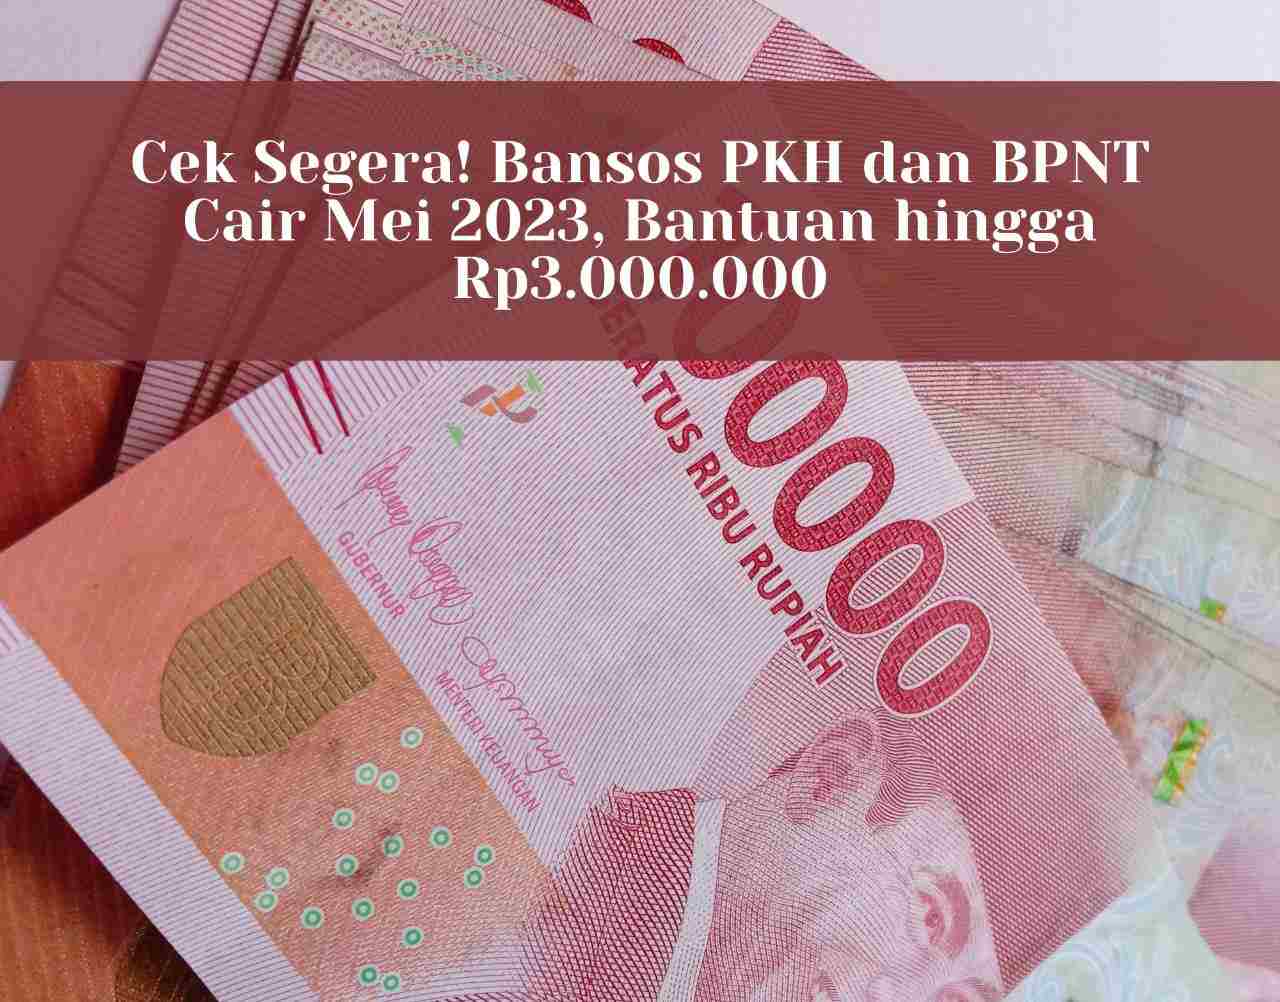 Cek Segera! Bansos PKH dan BPNT Cair Mei 2023, Bantuan hingga Rp3.000.000